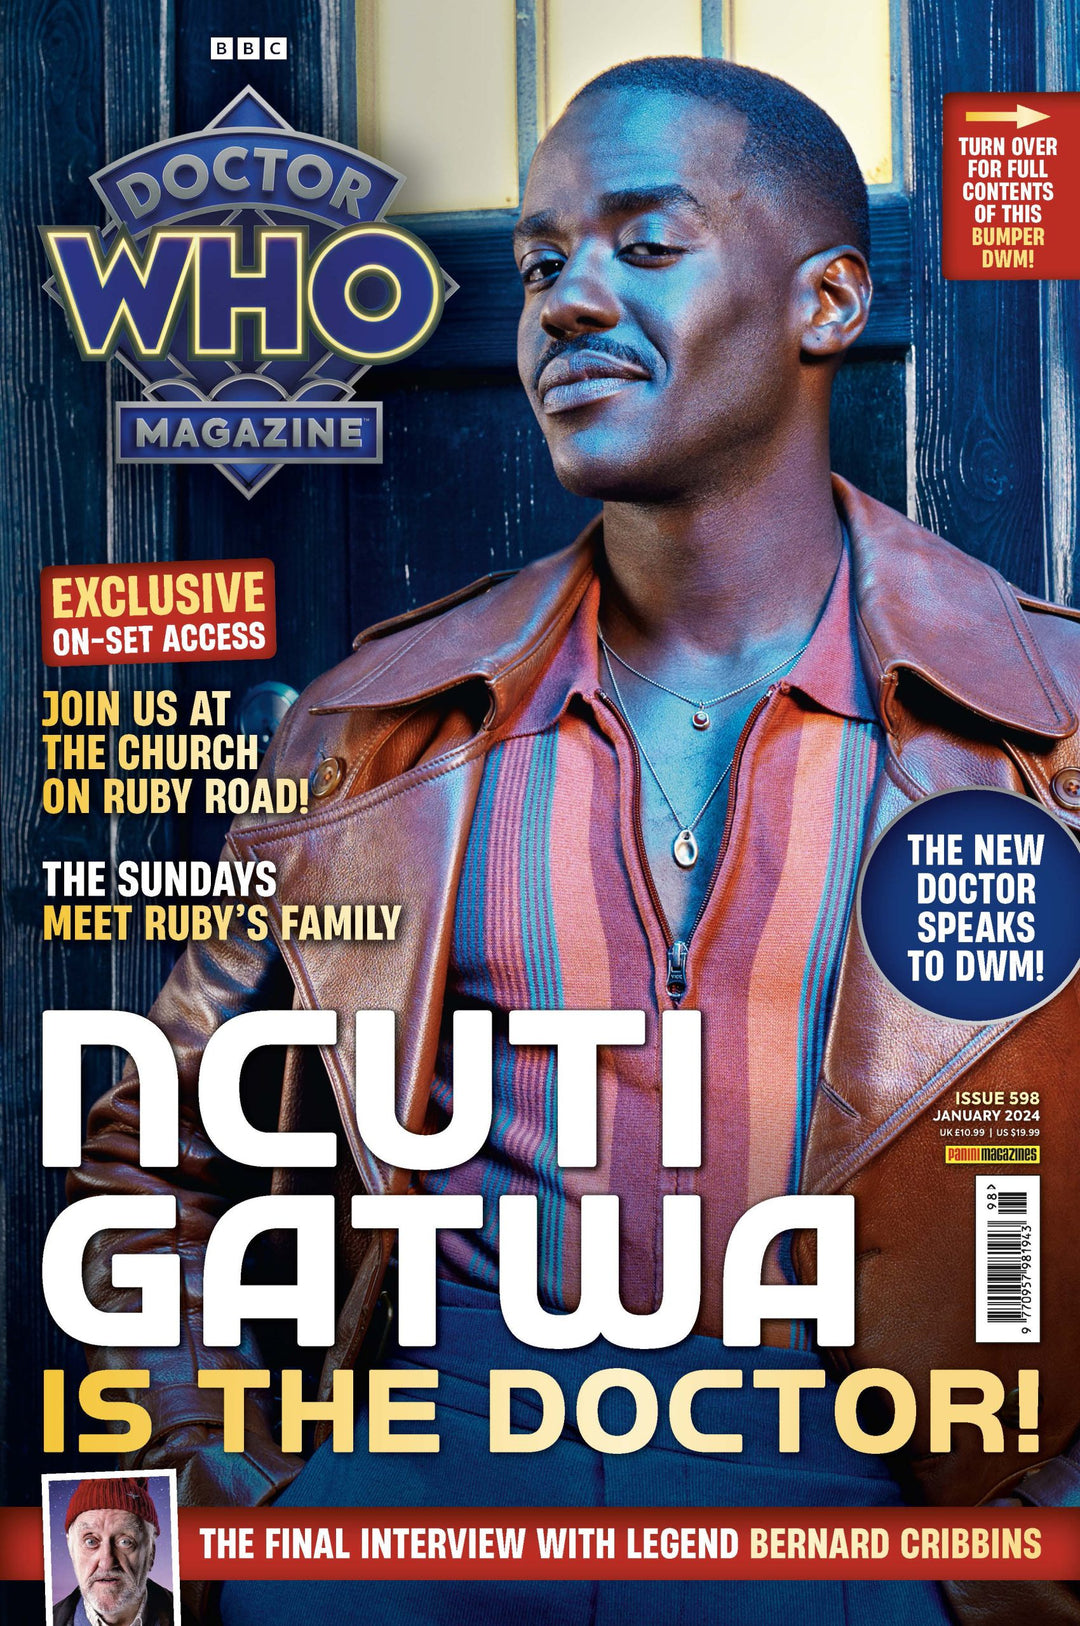 Doctor Who Magazine #598